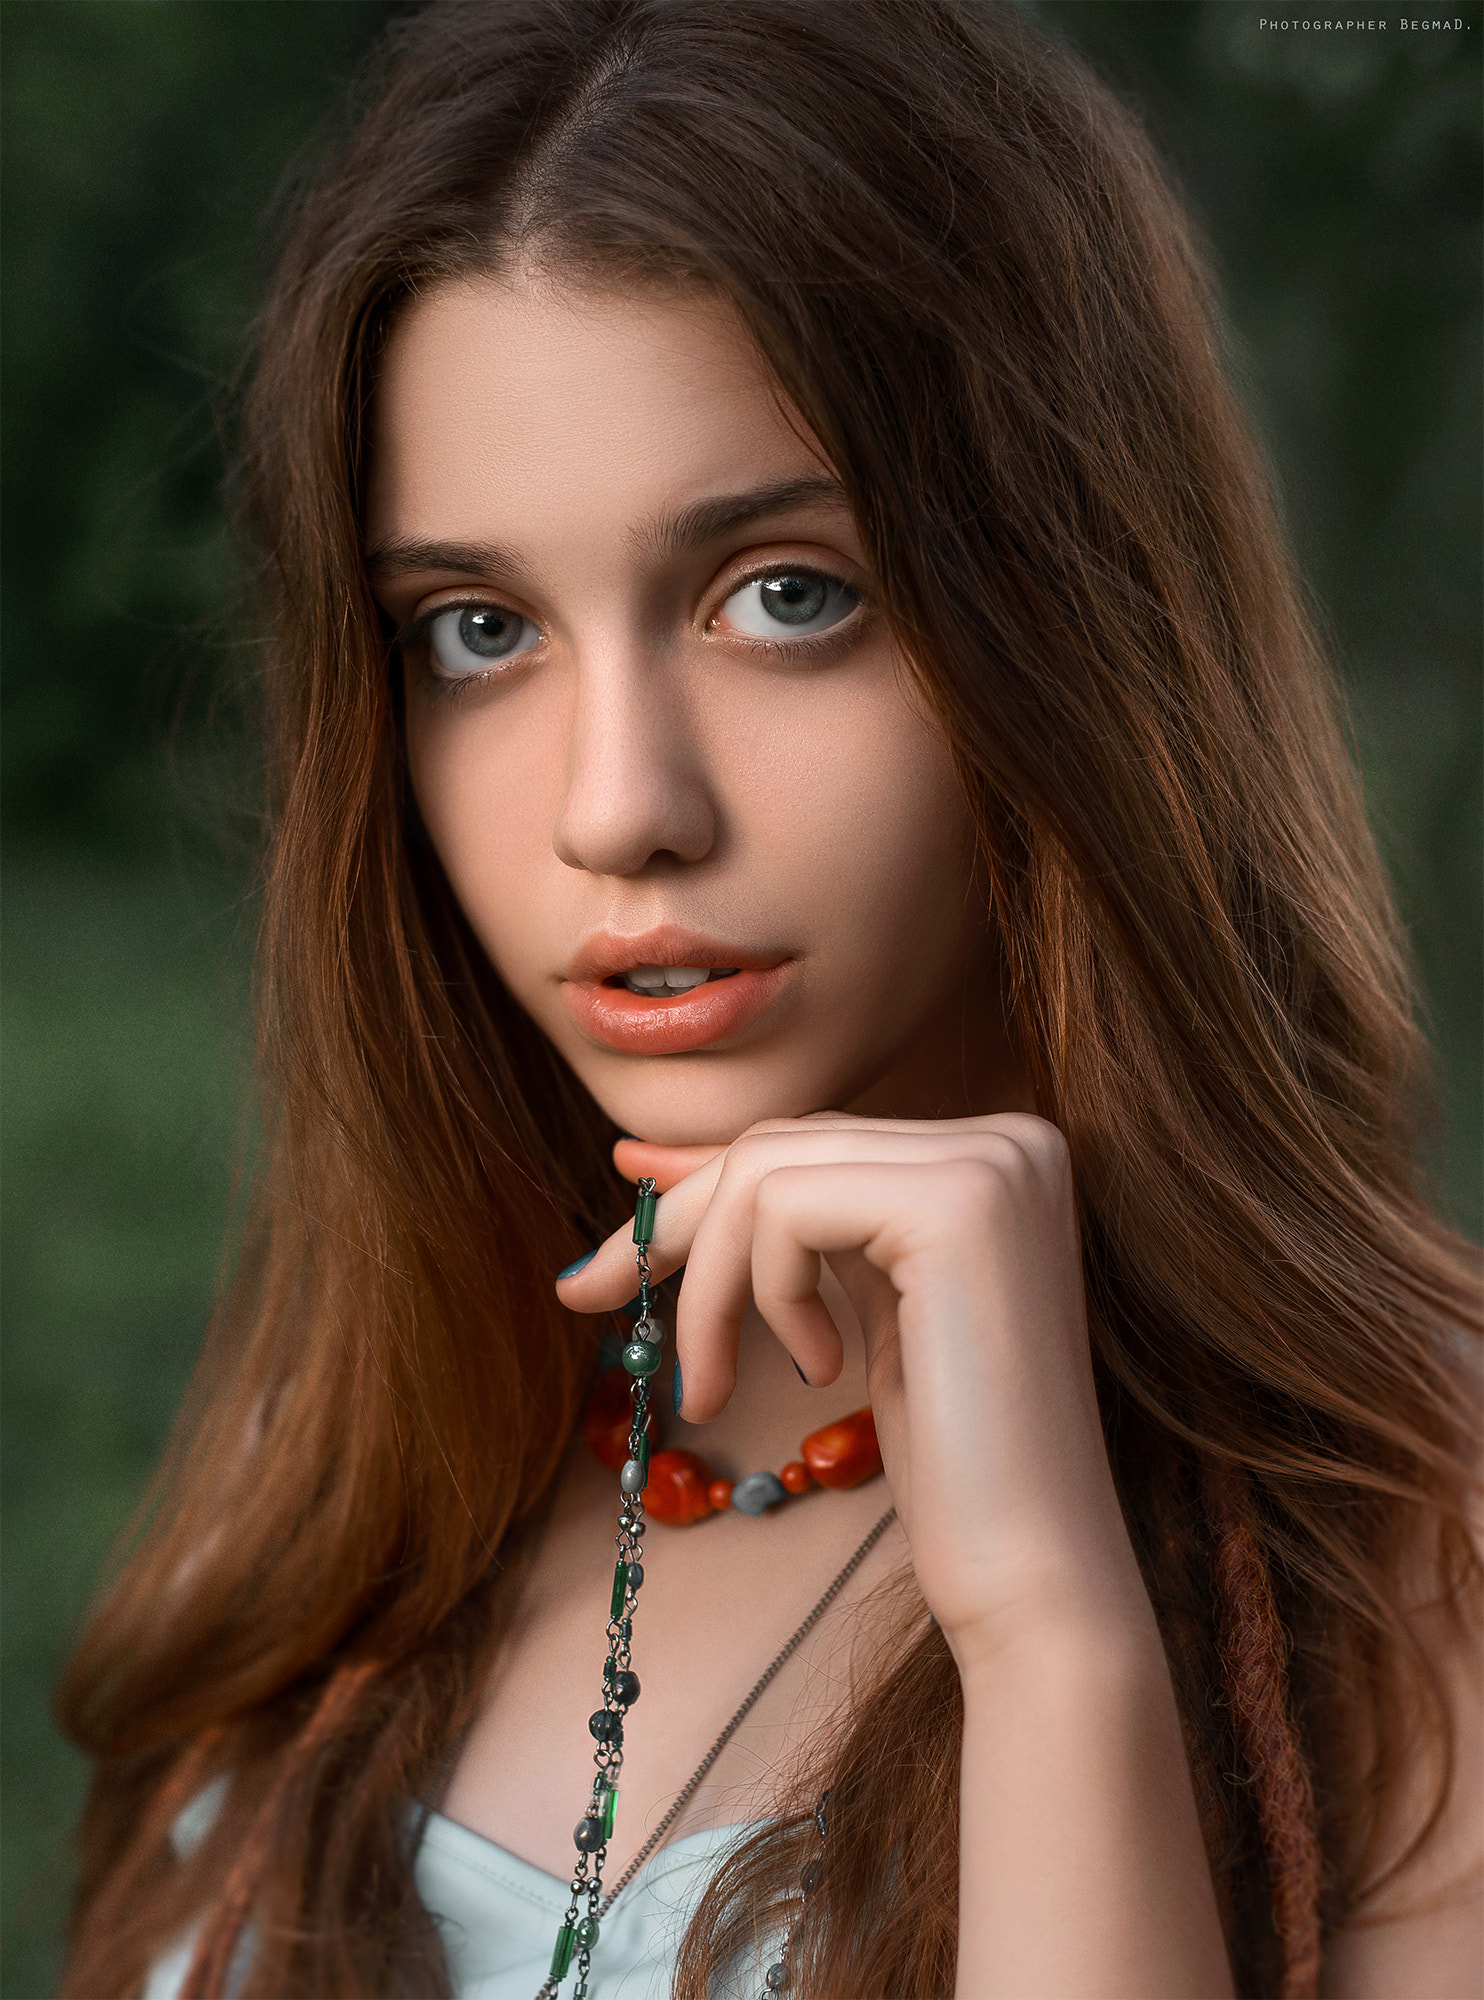 Dmitry Begma Women Brunette Long Hair Blue Eyes Looking At Viewer Jewelry Necklace Portrait Makeup L 1484x2000